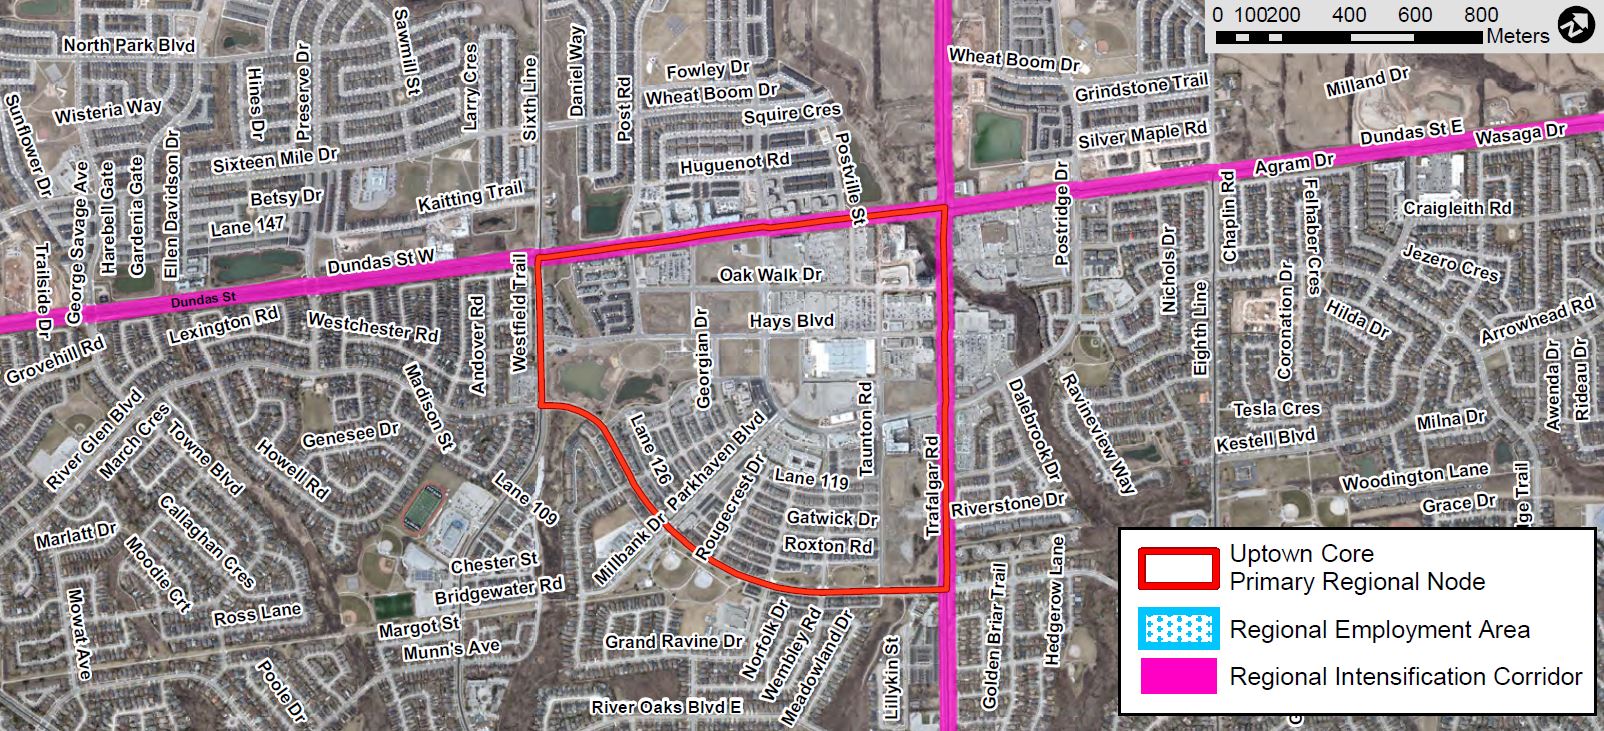 Map 6j – Uptown Core Primary Regional Node